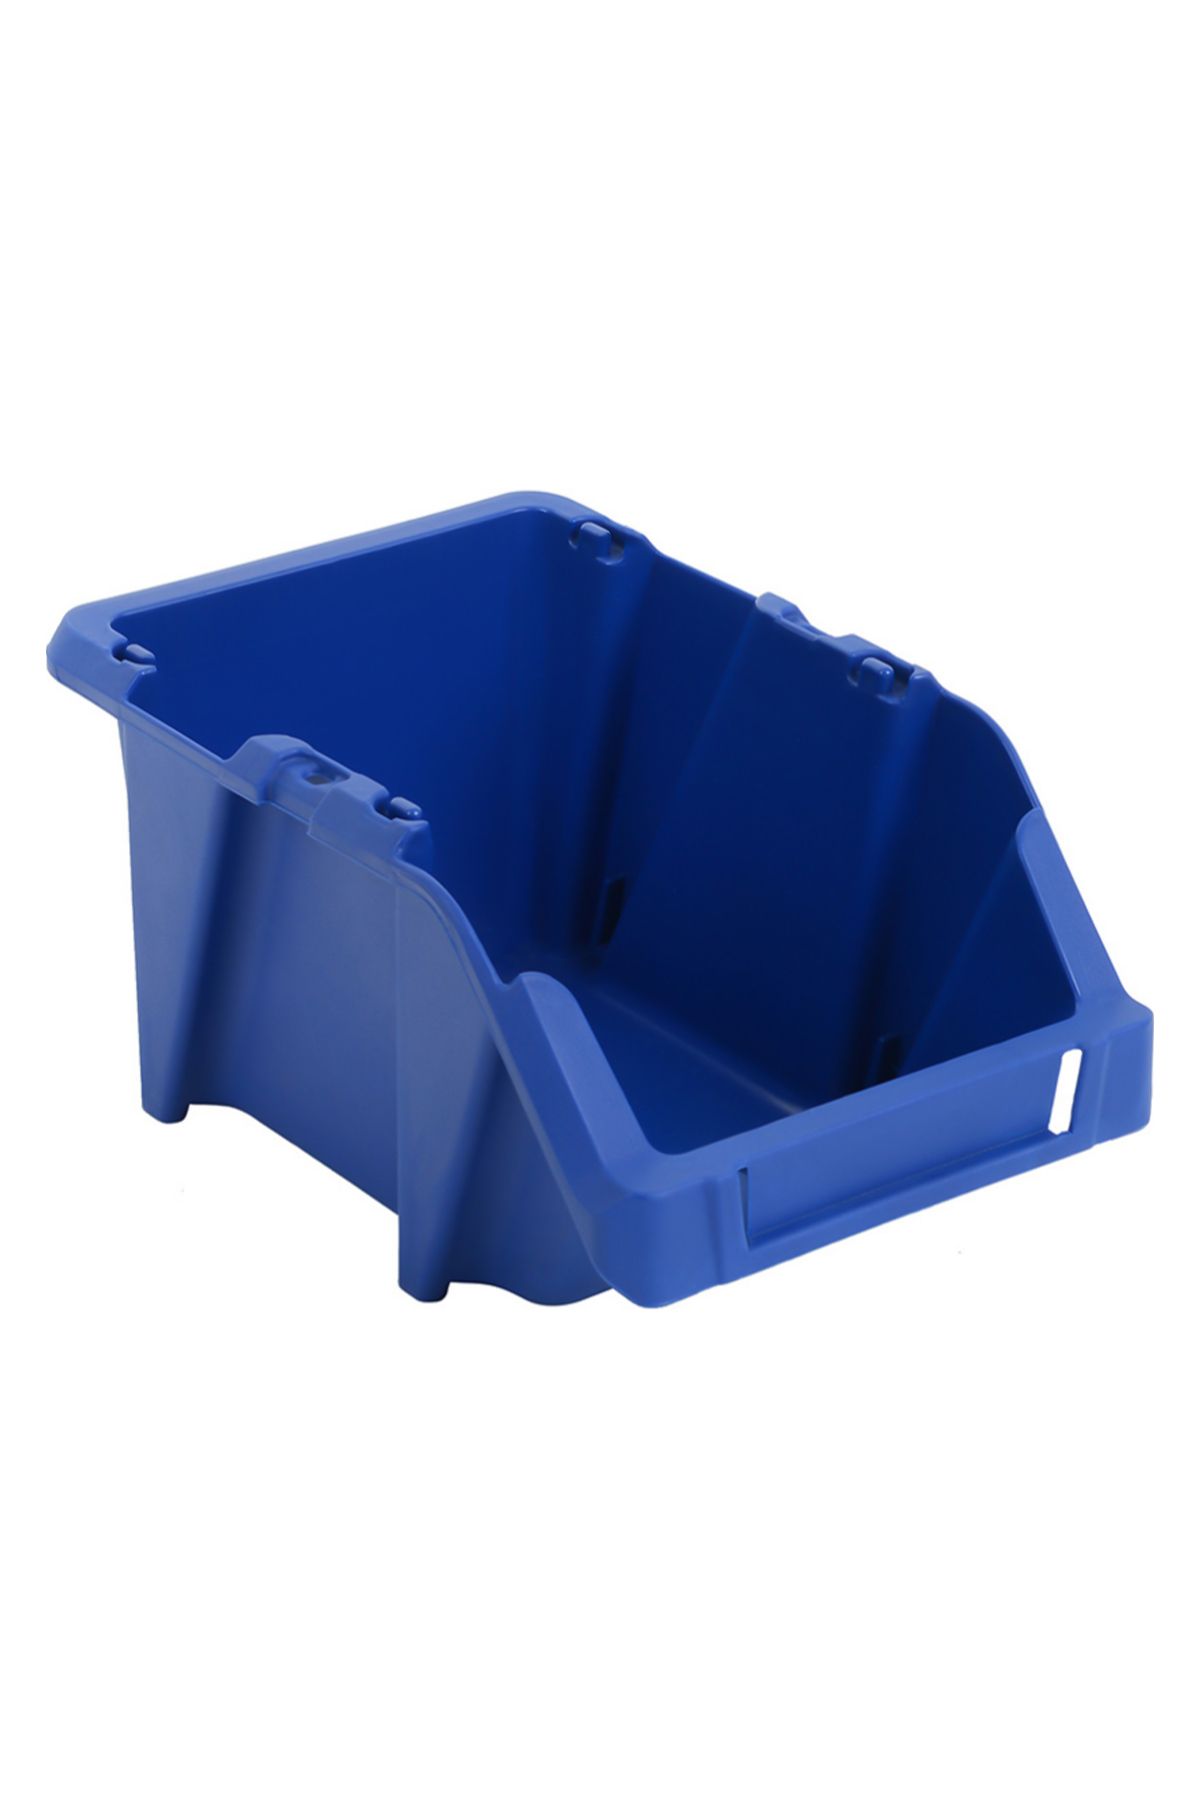 akdenizrack Plastik Avadanlık Kutusu Mavi